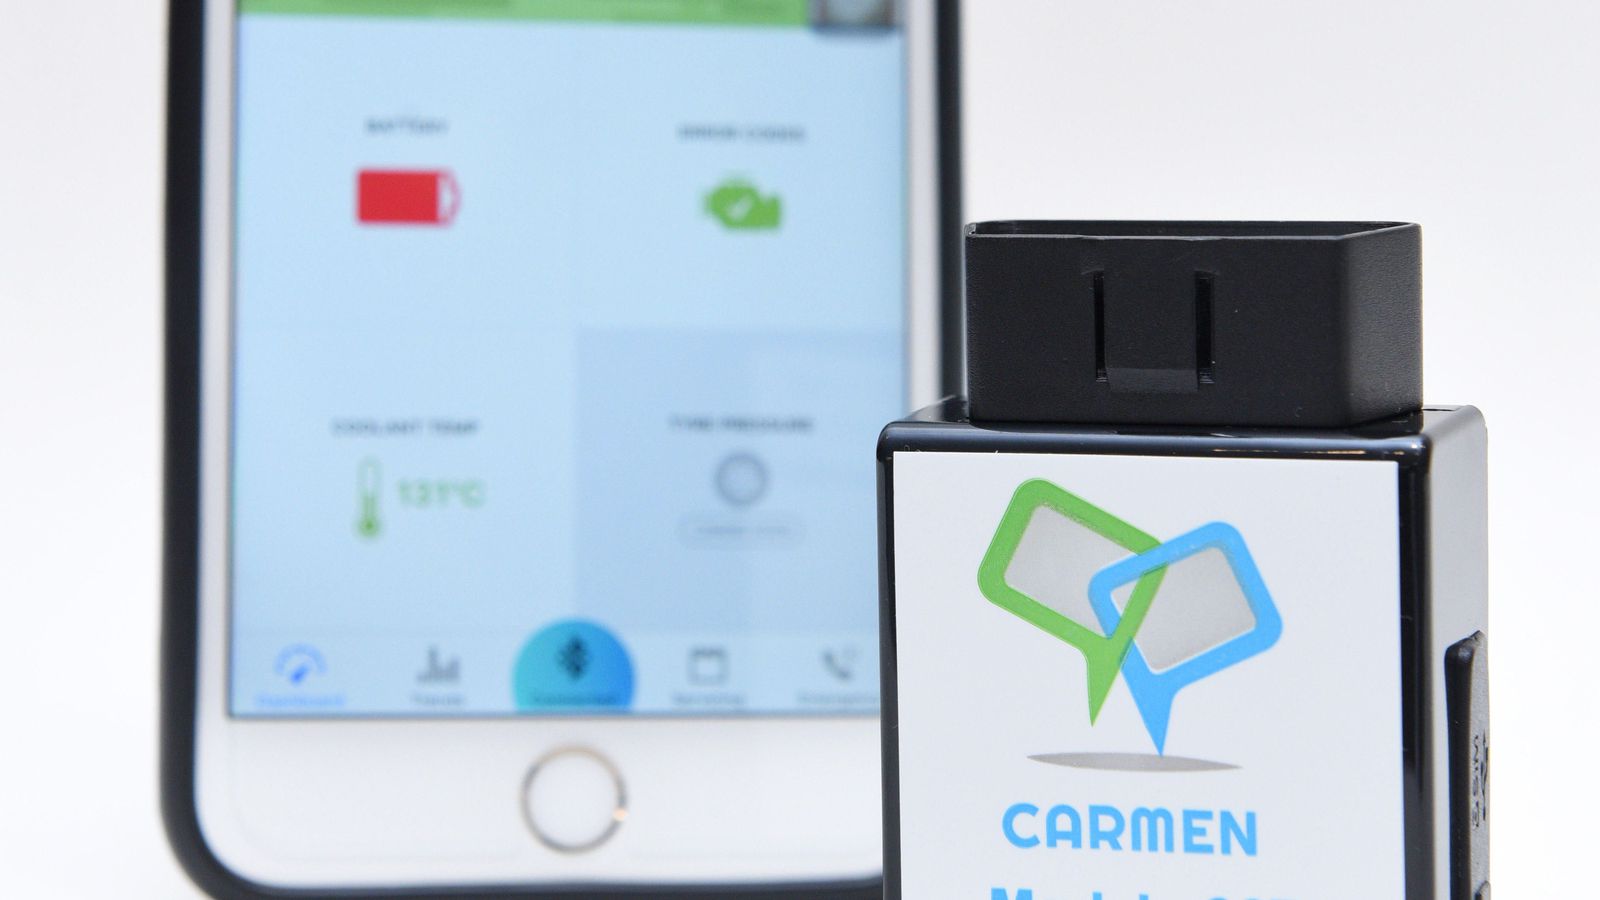 [Video] How to Use Carmen Car Diagnostic Kit